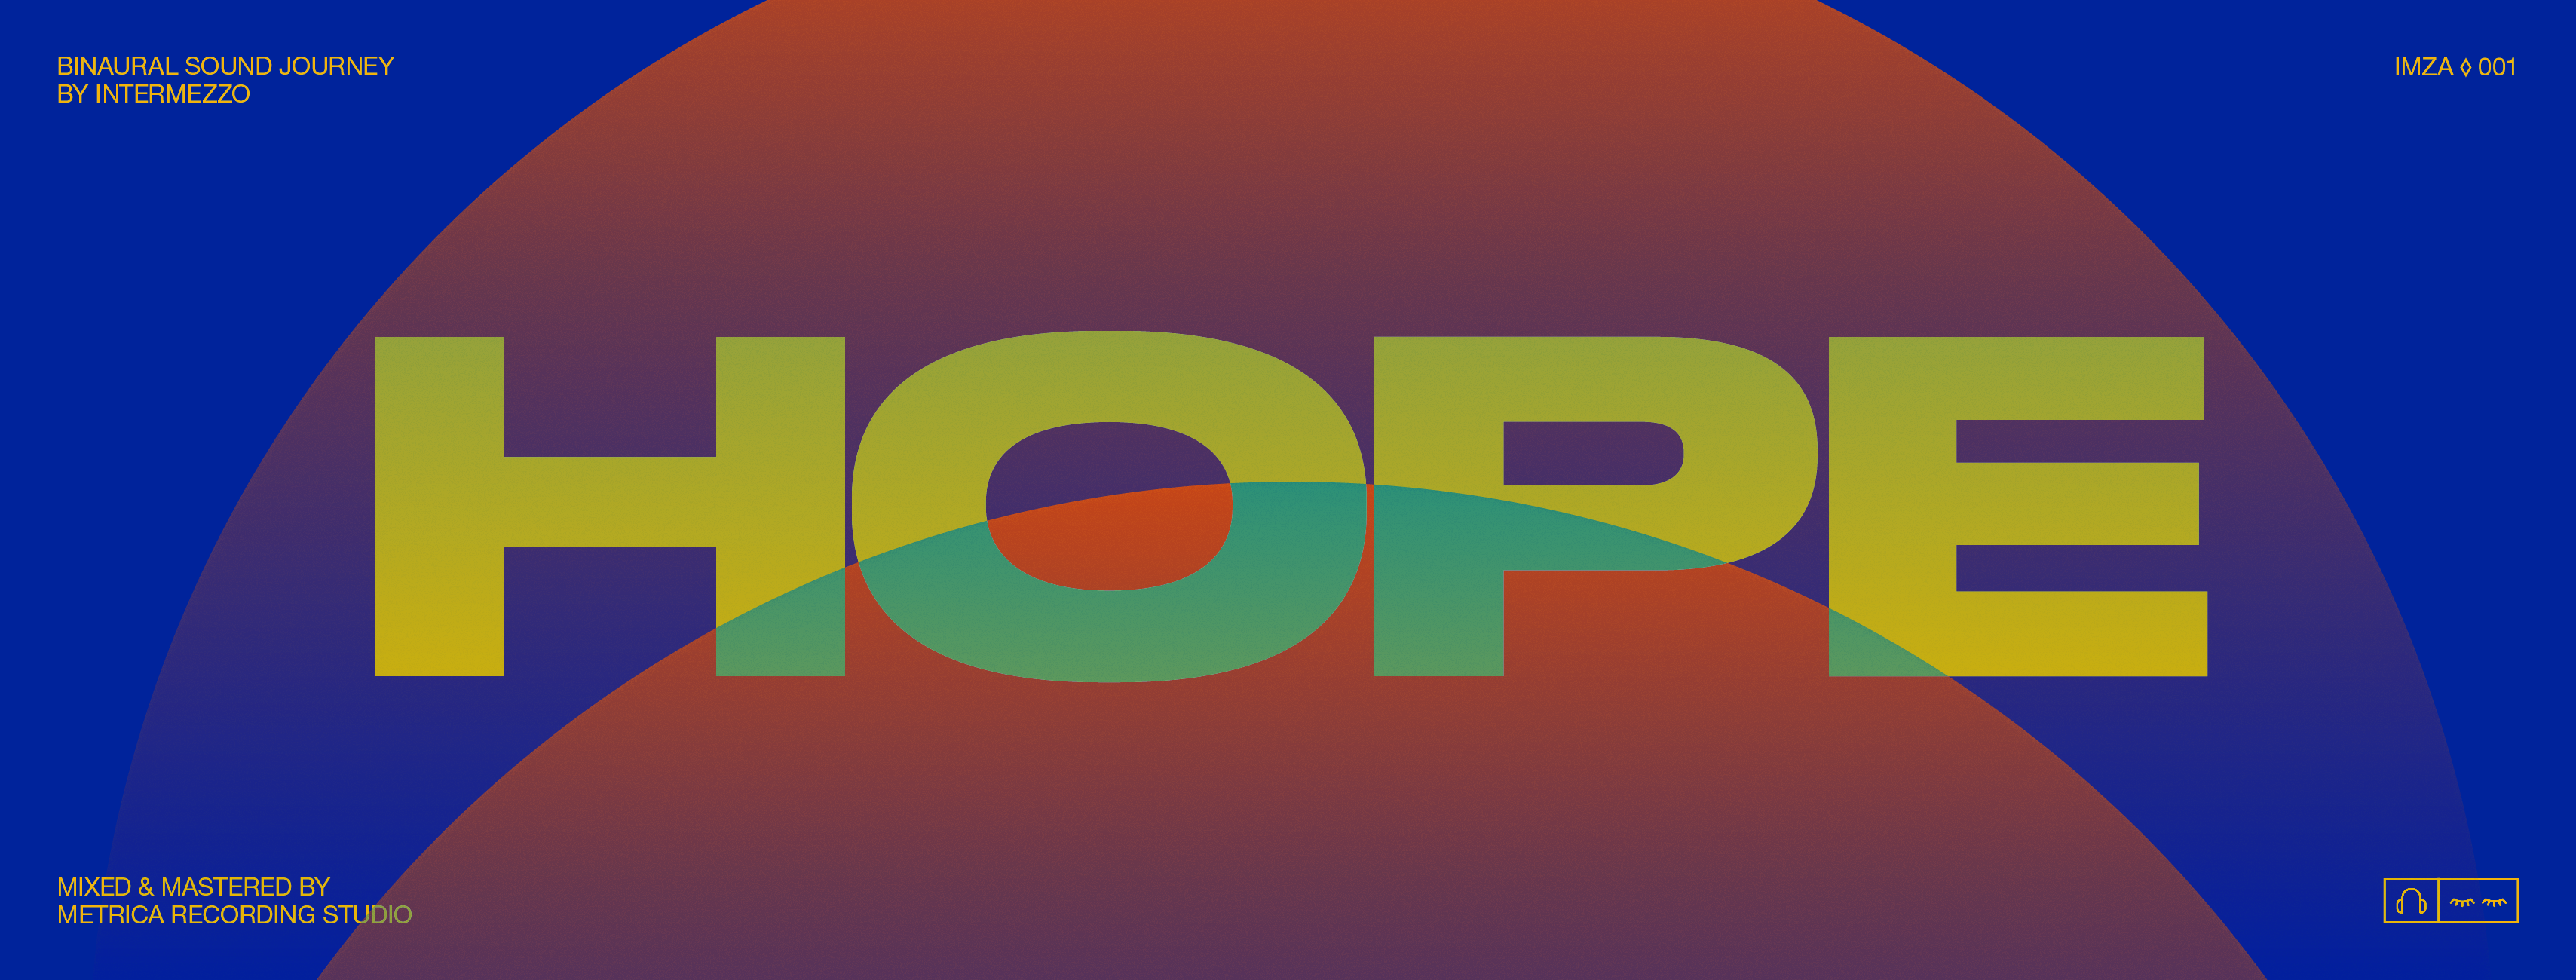 INTERMEZZO presenta “HOPE” en formato binaural